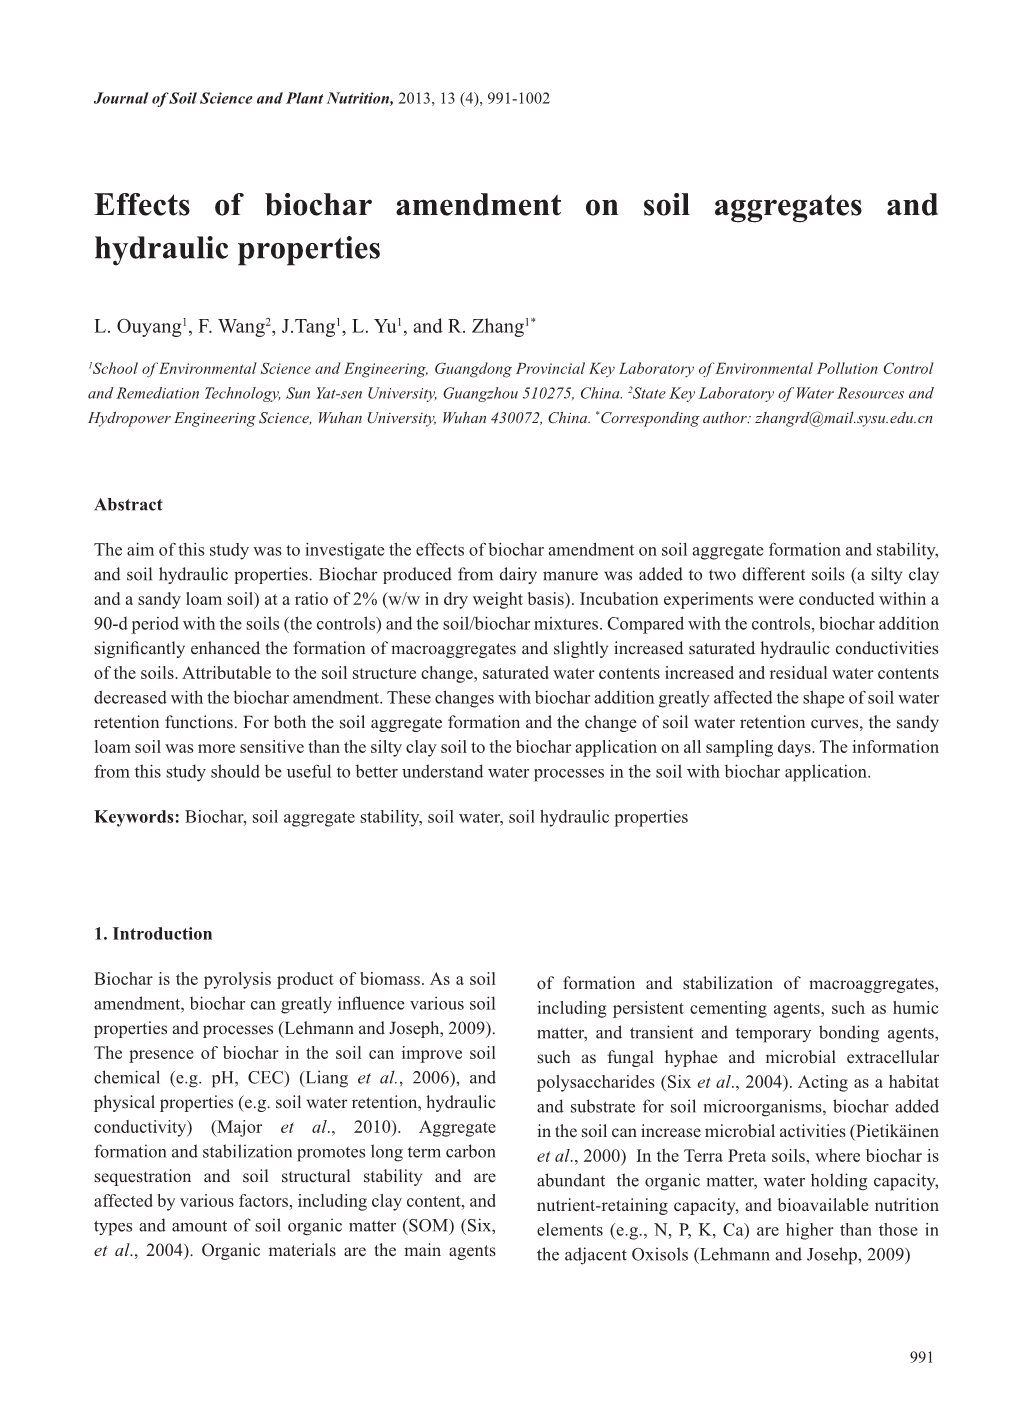 Effects of Biochar Amendment on Soil Aggregates and Hydraulic Properties